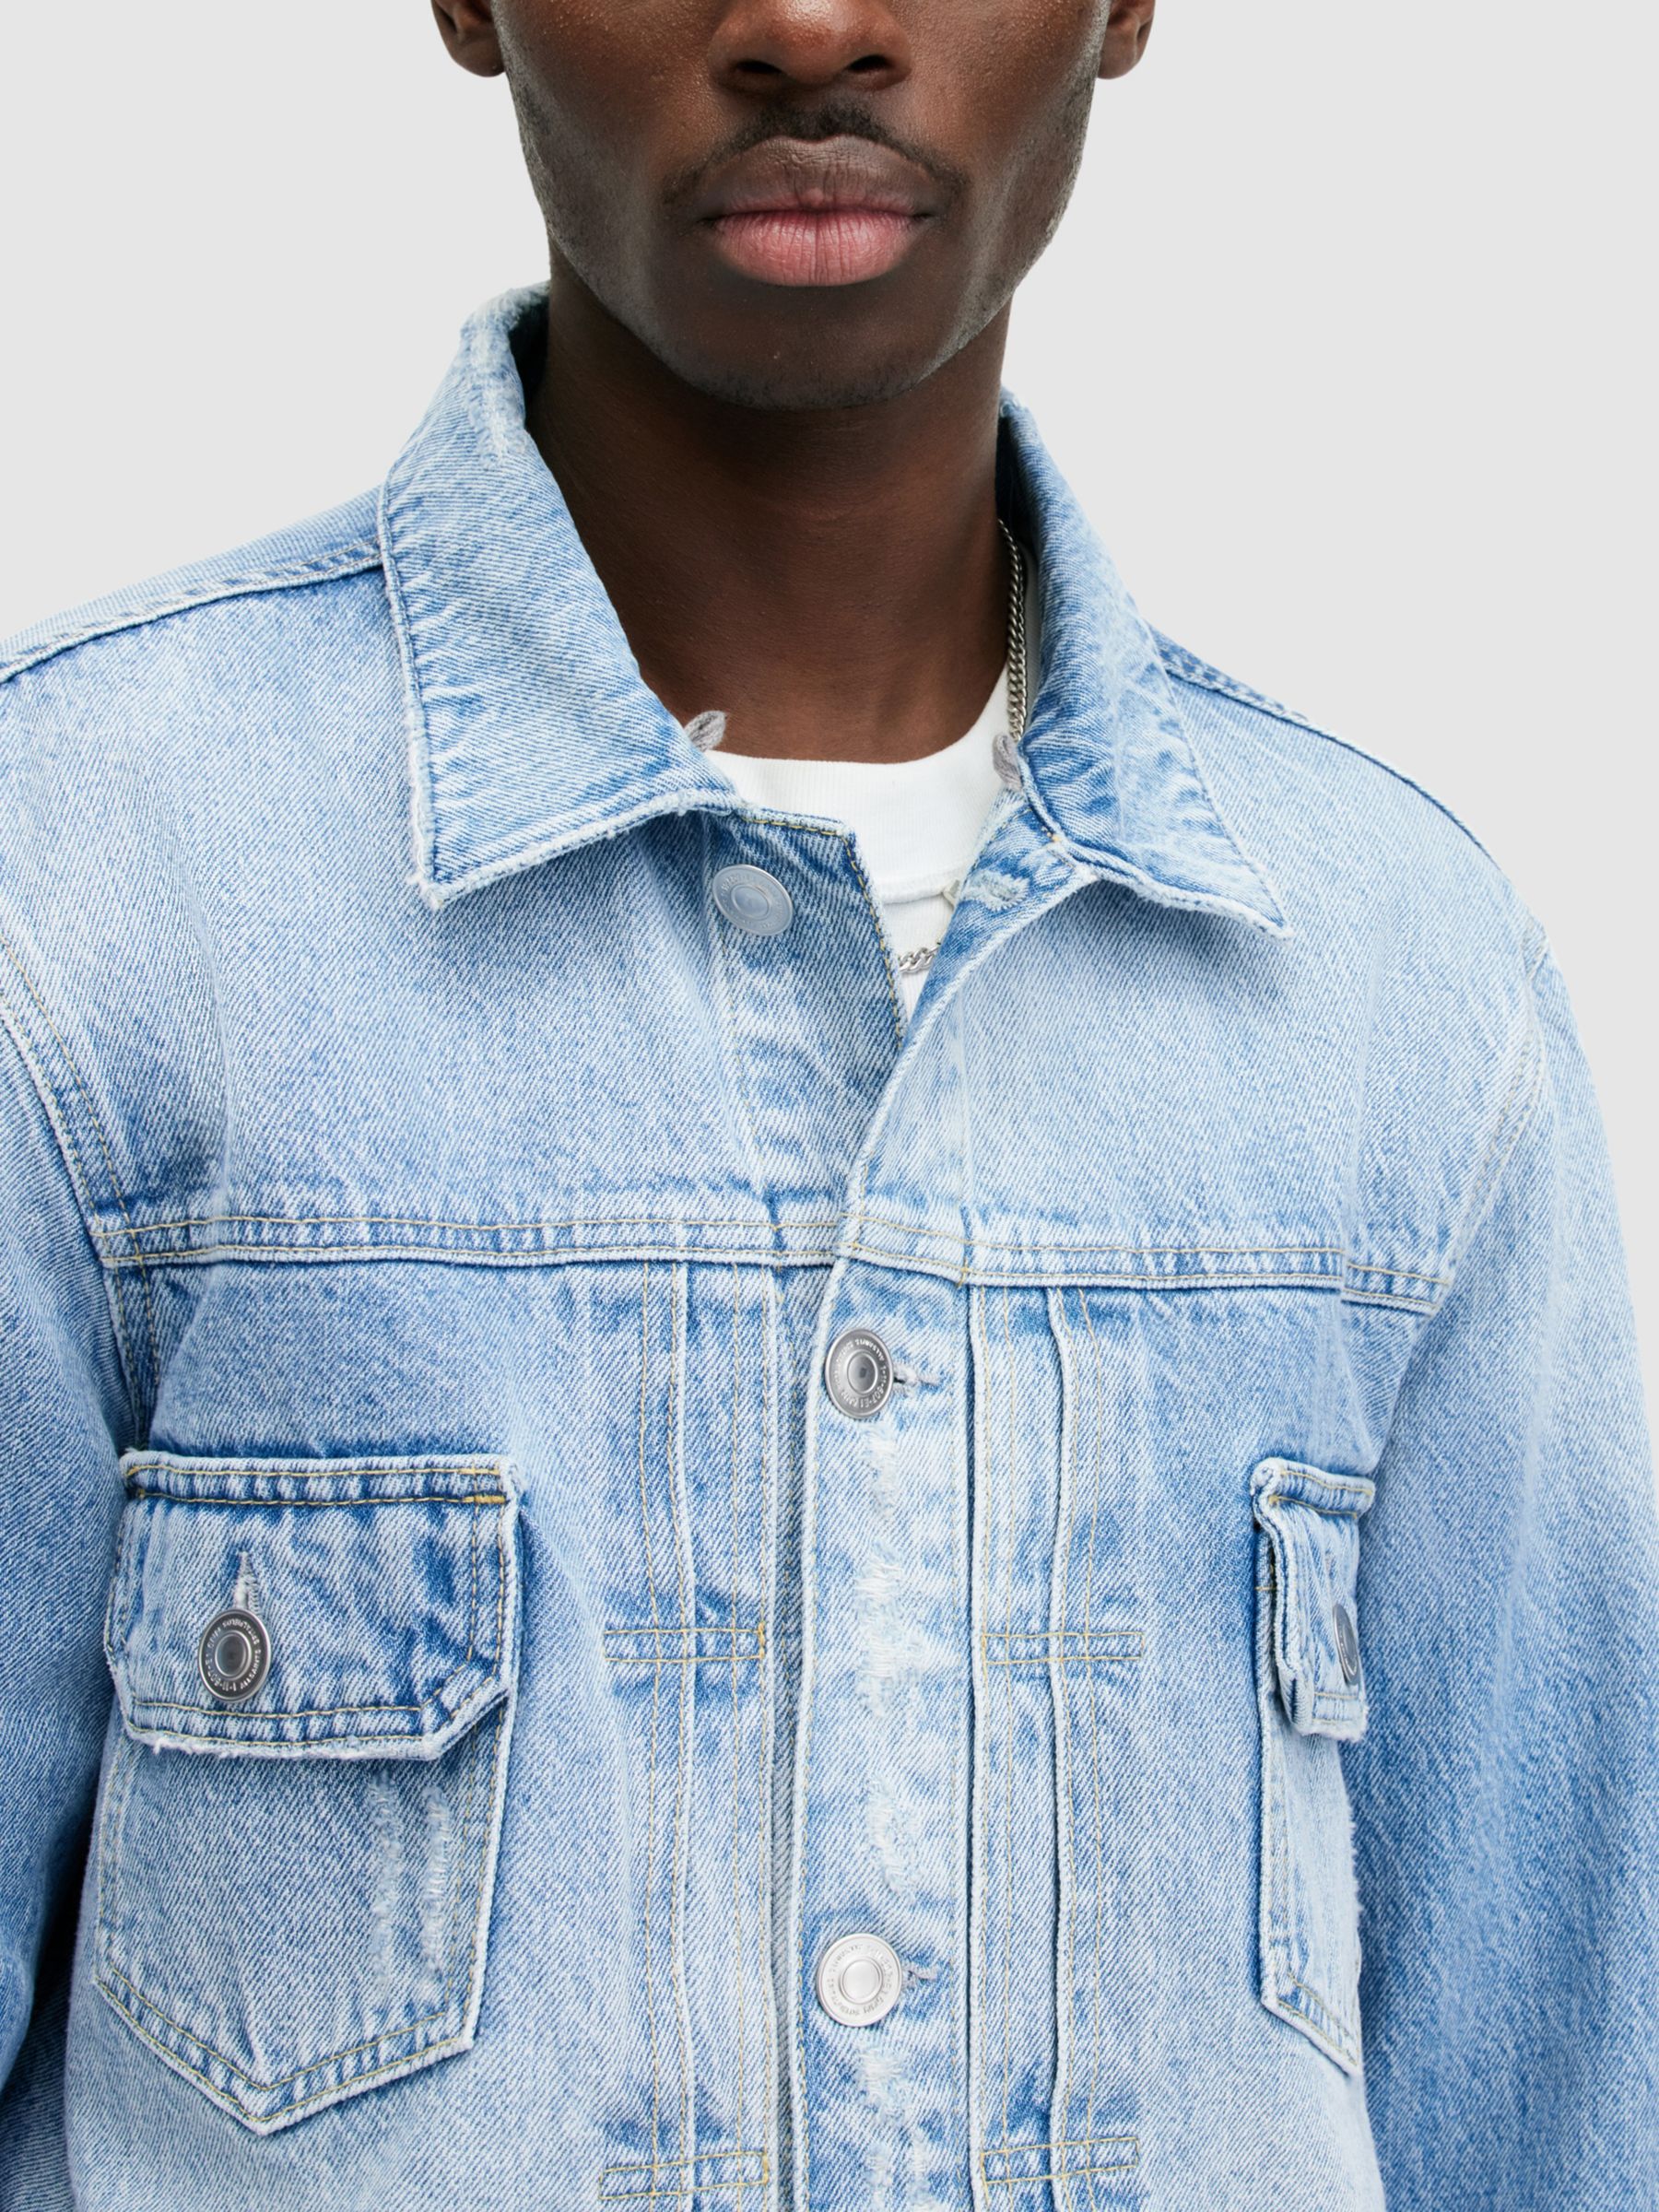 AllSaints Spirit Organic Cotton Hooded Denim Jacket, Indigo Blue, XL